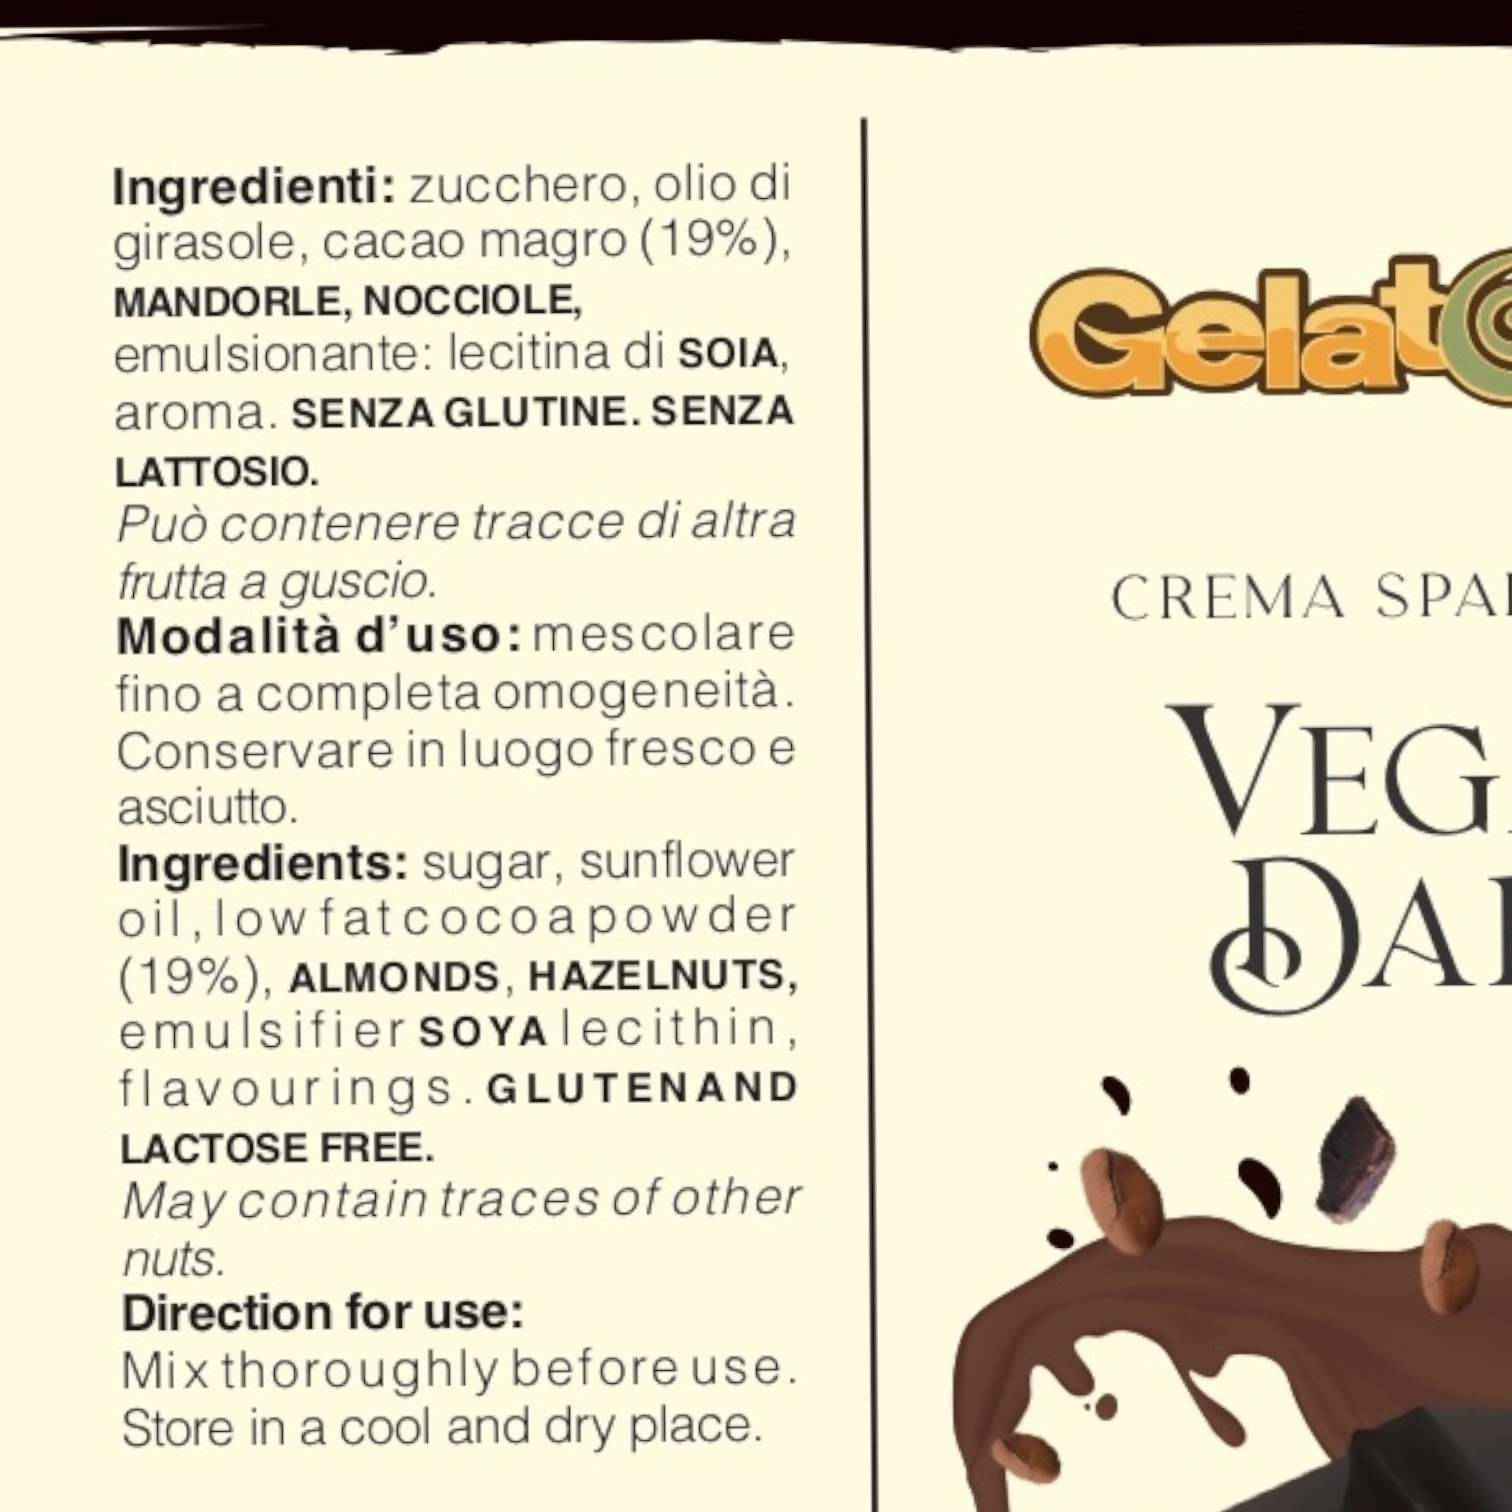 Ricarica Crema Vegan Dark per "Fontana ChocoParty" 400g